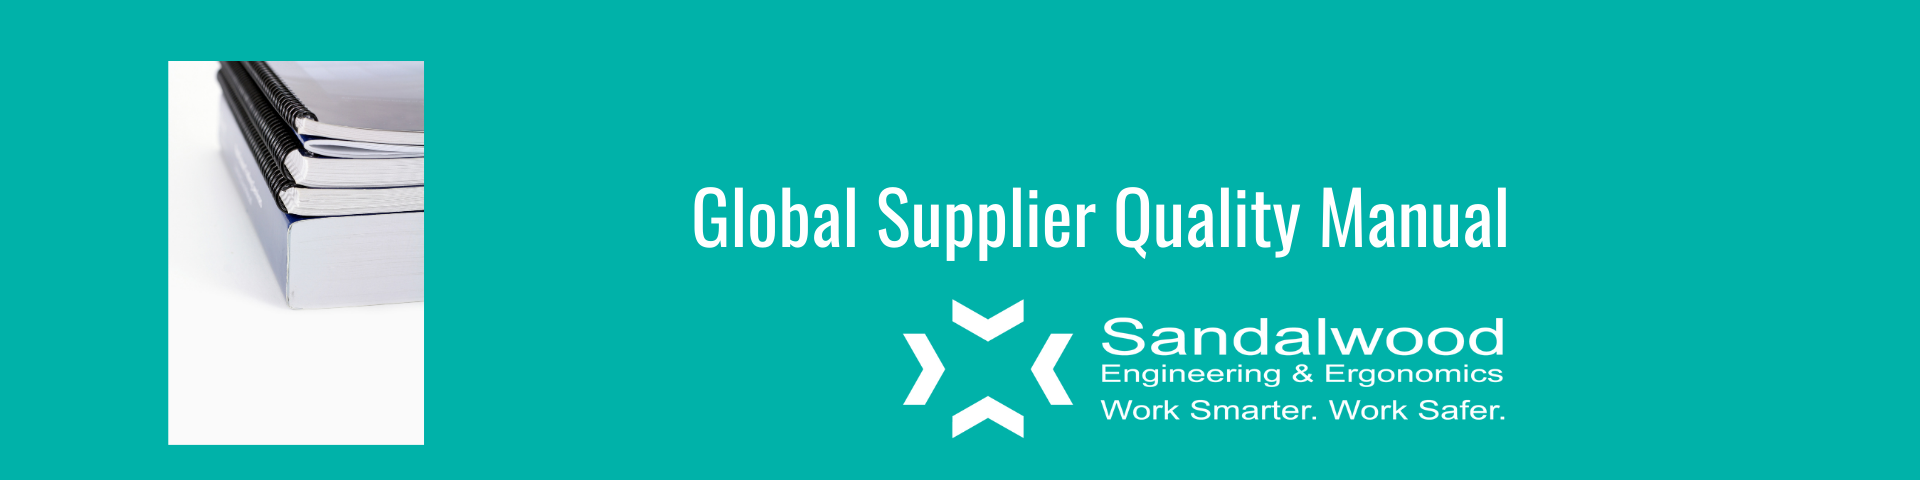 global supplier quality manual Sandalwood